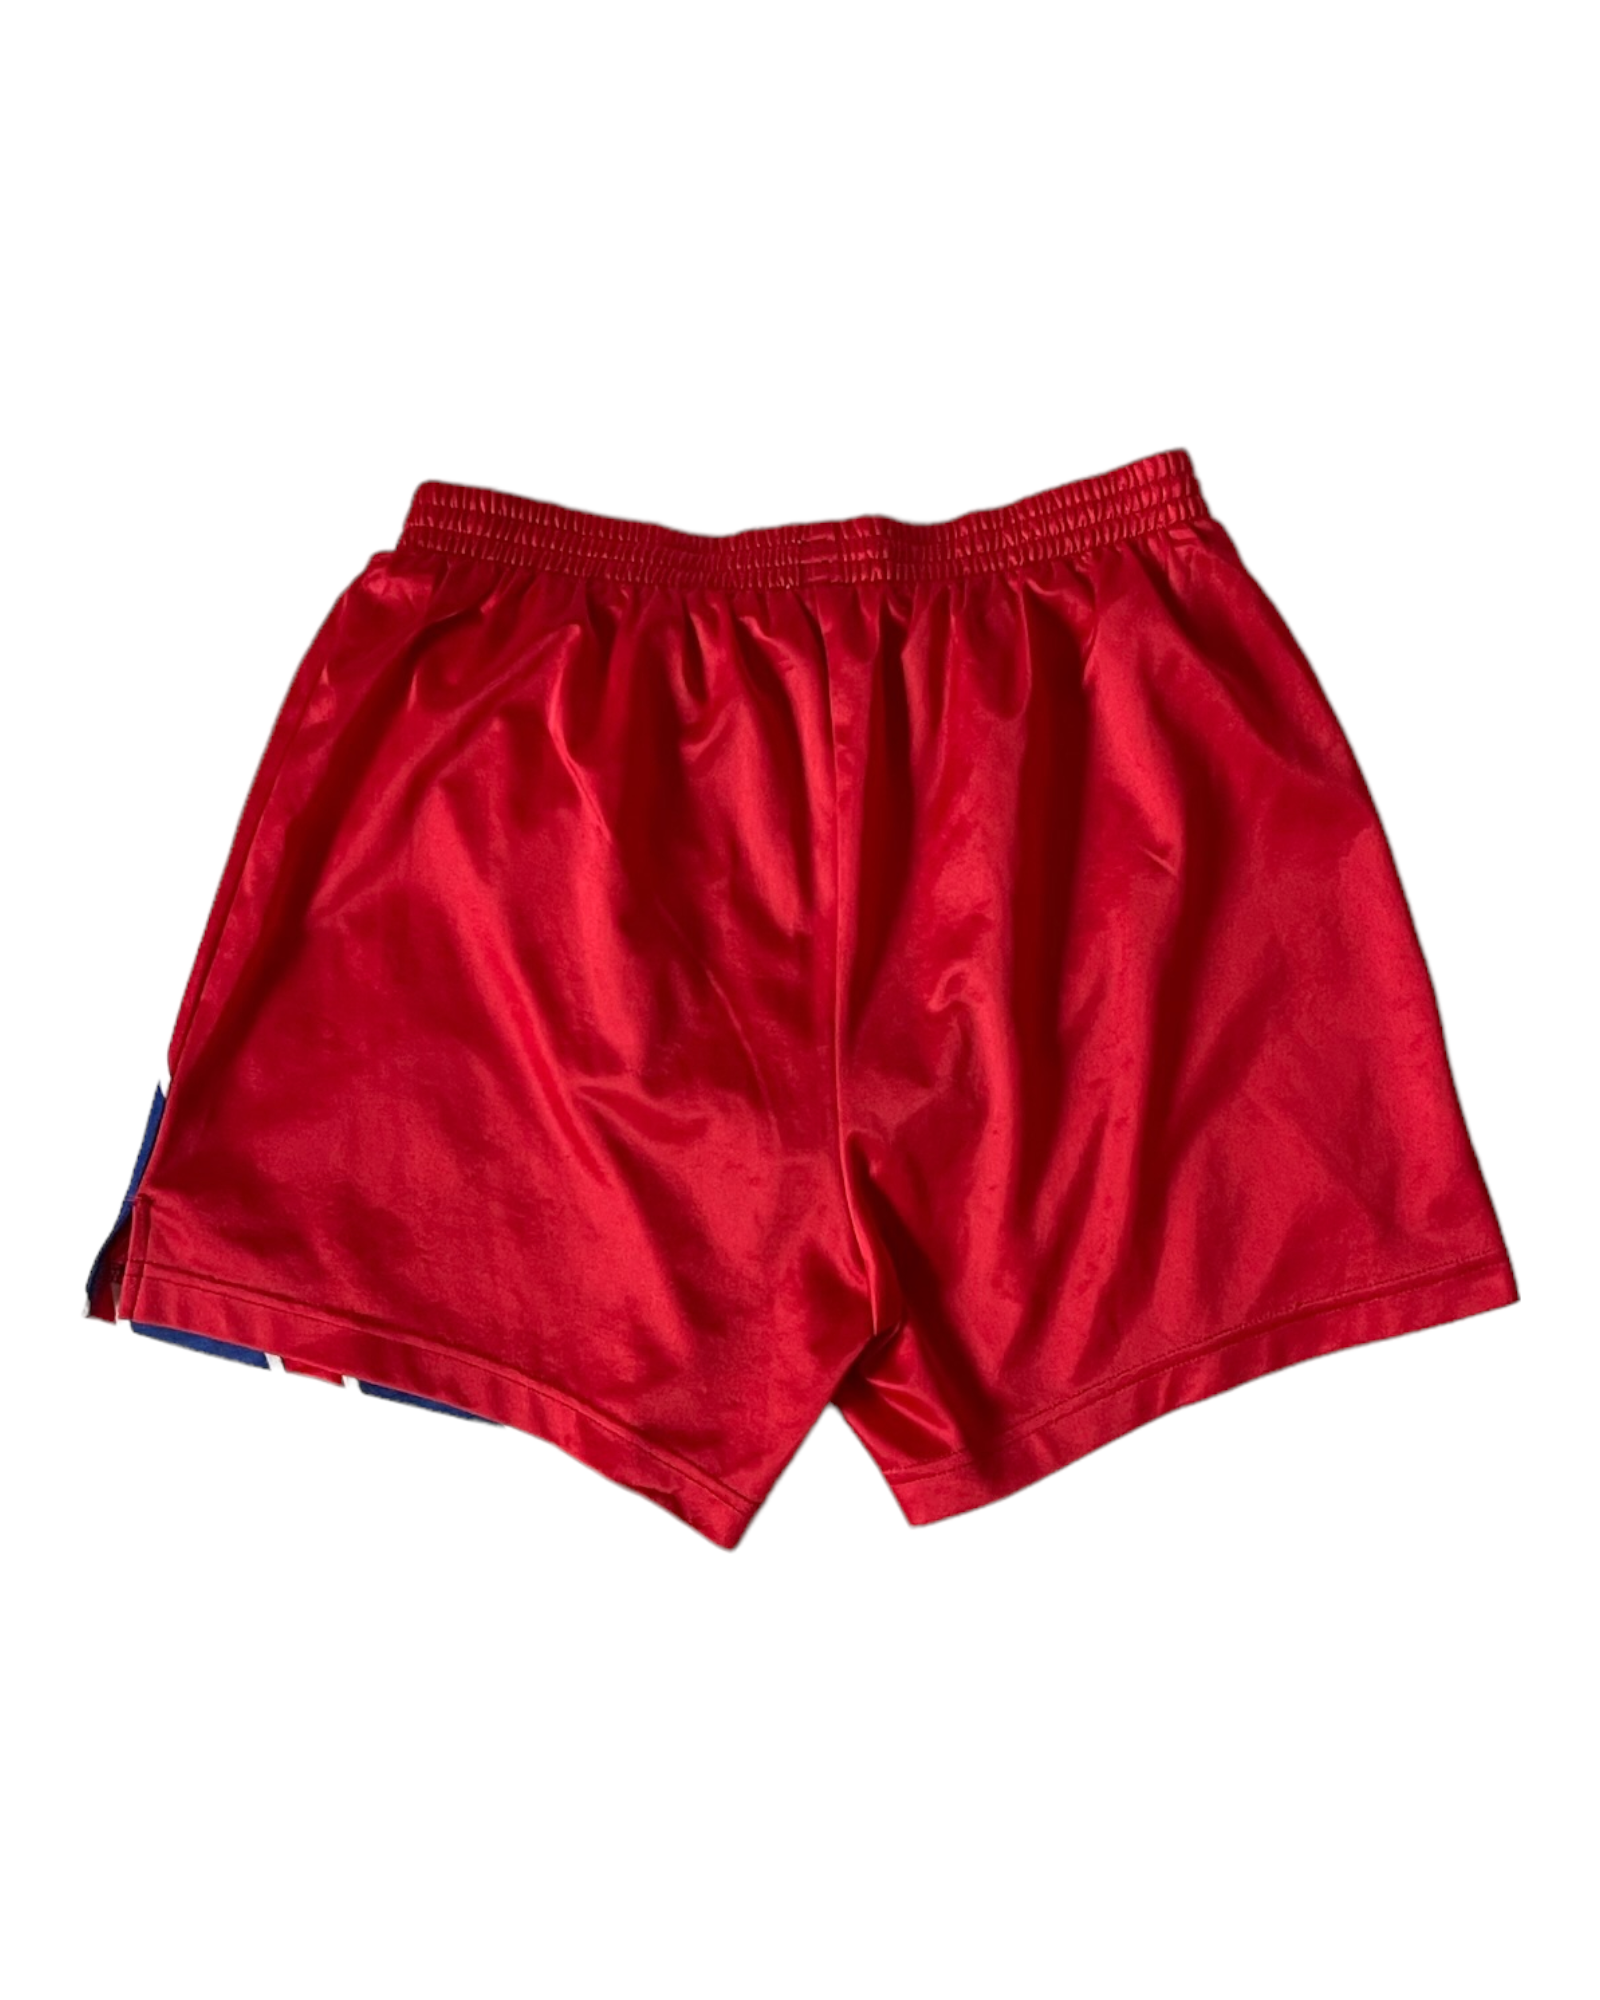 Vintage Adidas Equipment Bayern Munchen Munich Football Shorts Home 1993-1995 Red Size M